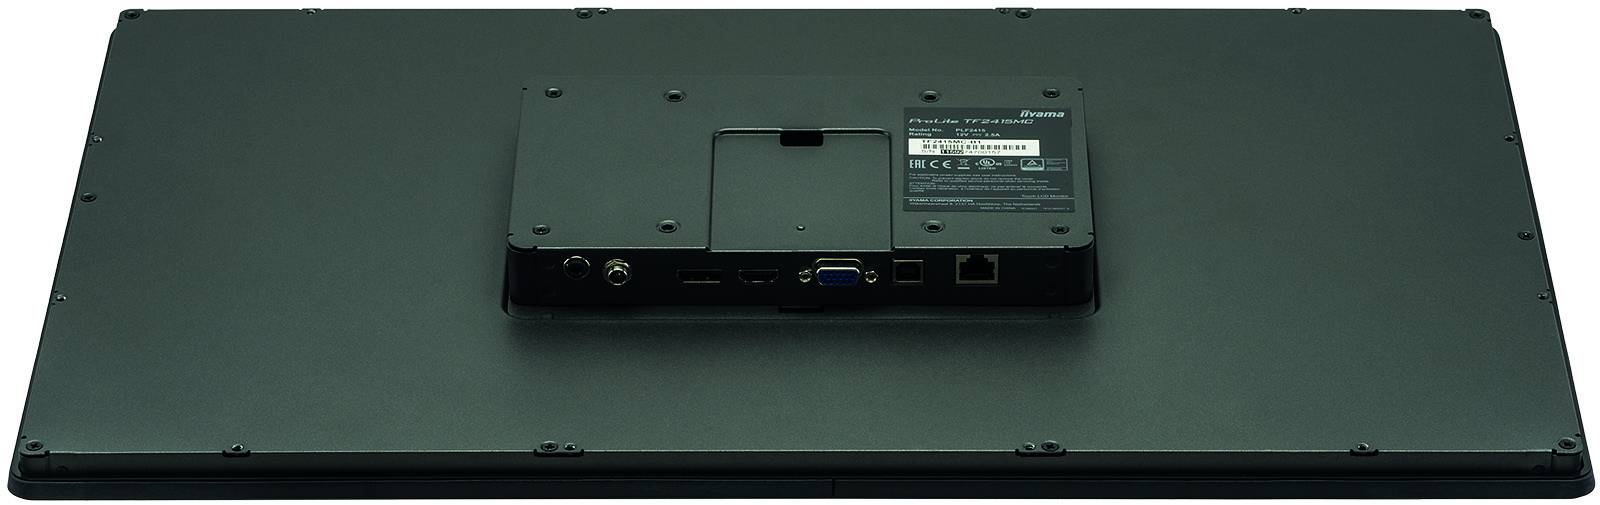 Rca Informatique - image du produit : TF2415MC-B2 3000:1 VGA HDMI DP 238IN LCD 1920 X 1080 16:9 16MS